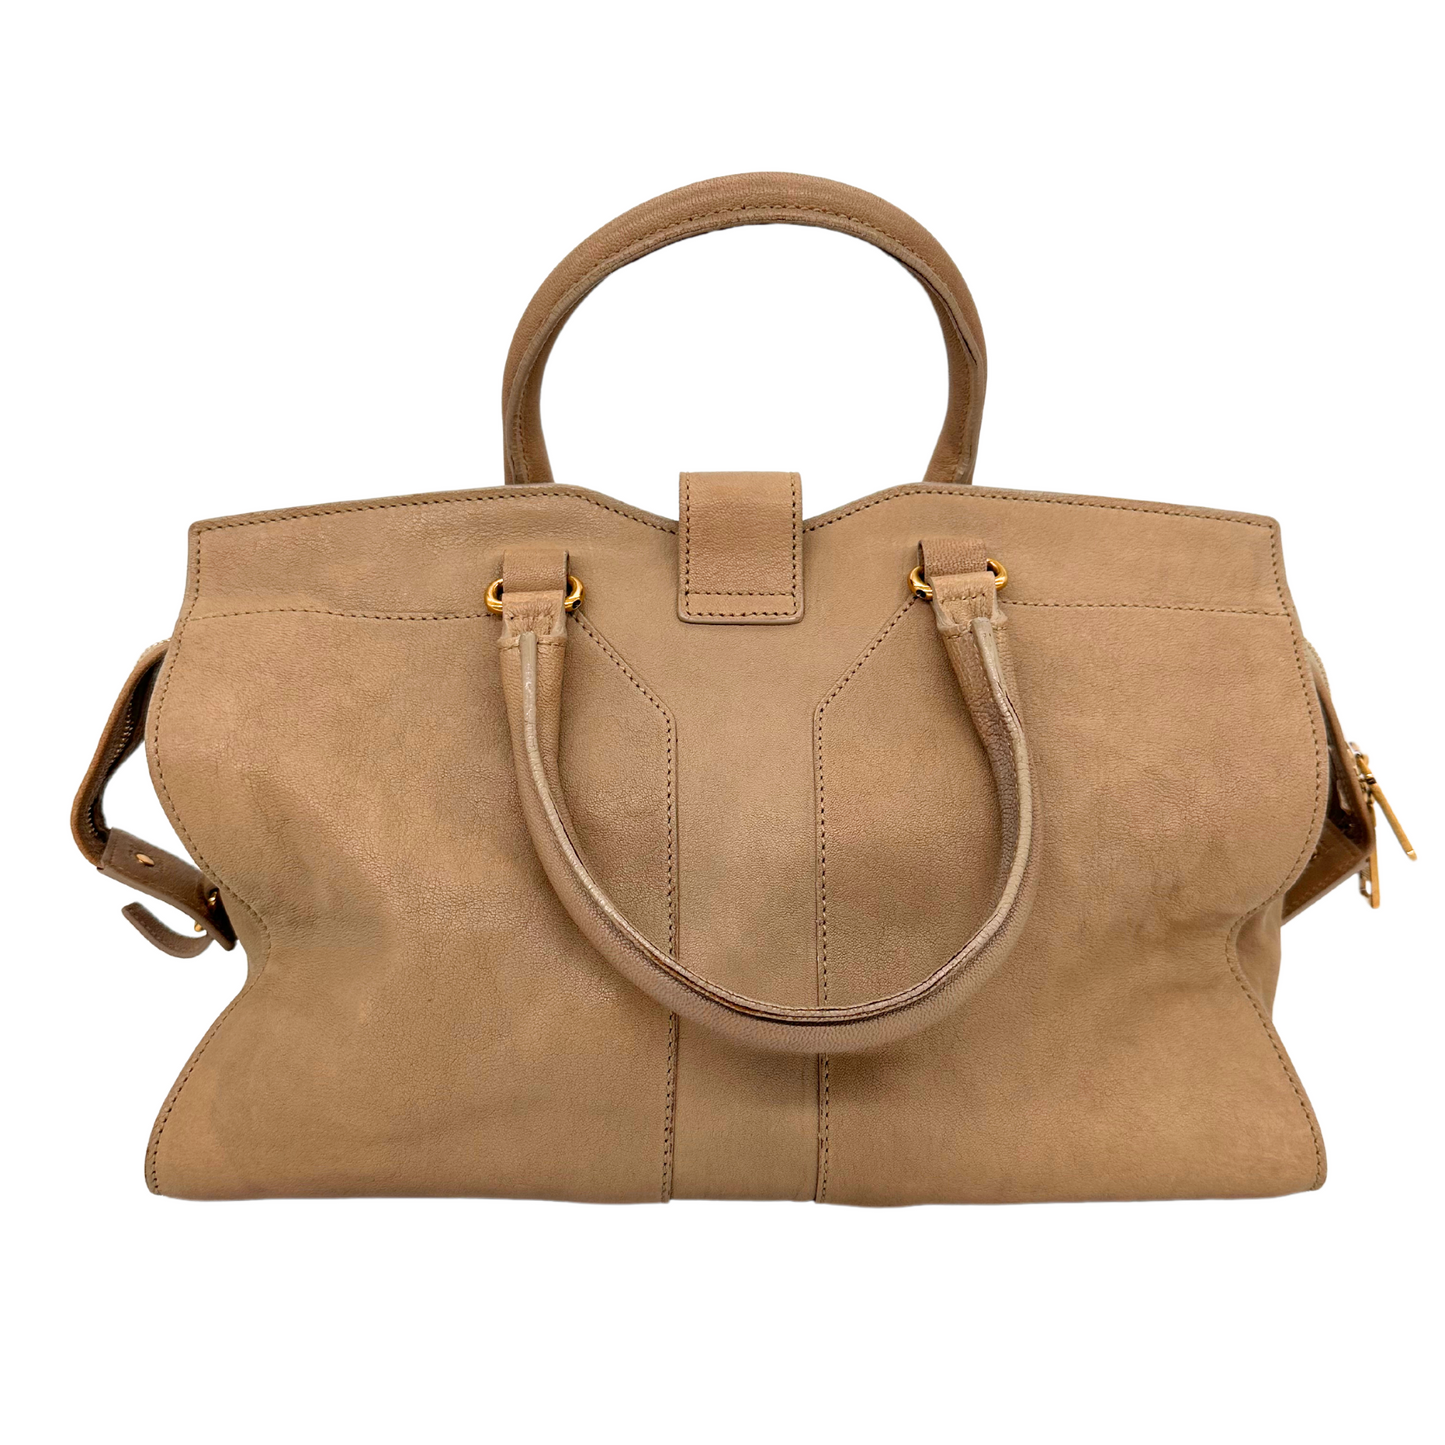 Yves Saint Laurent Beige Cabas Chyc Large Handbag